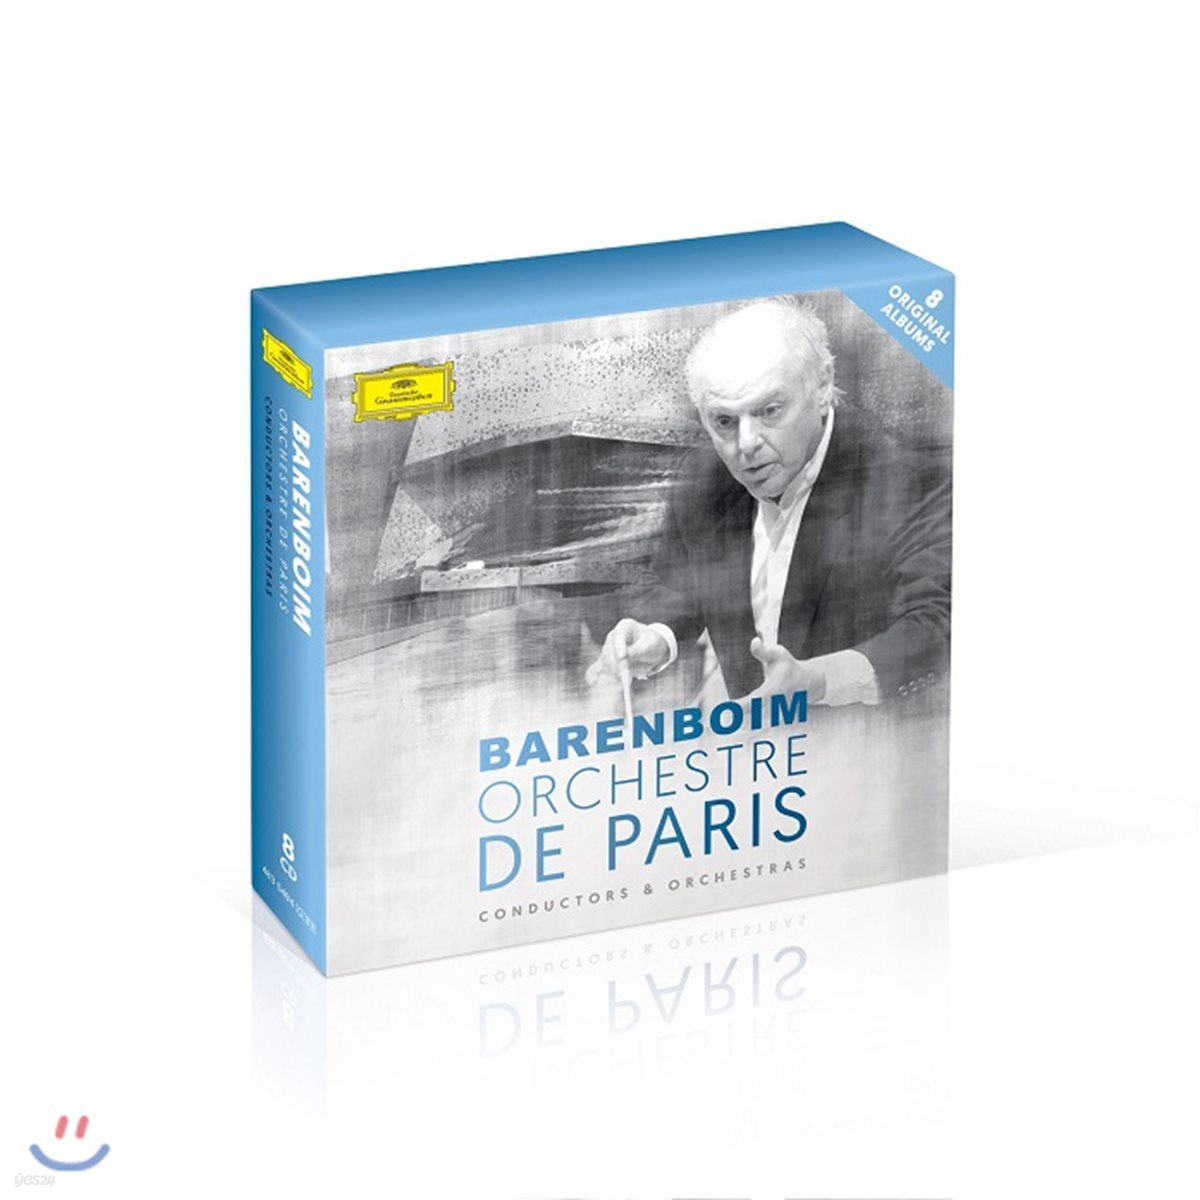 Daniel Barenboim 바렌보임과 파리 오케스트라의 8개 명반 (Barenboim / Orchestre de Paris Conductors &amp; Orchestras)